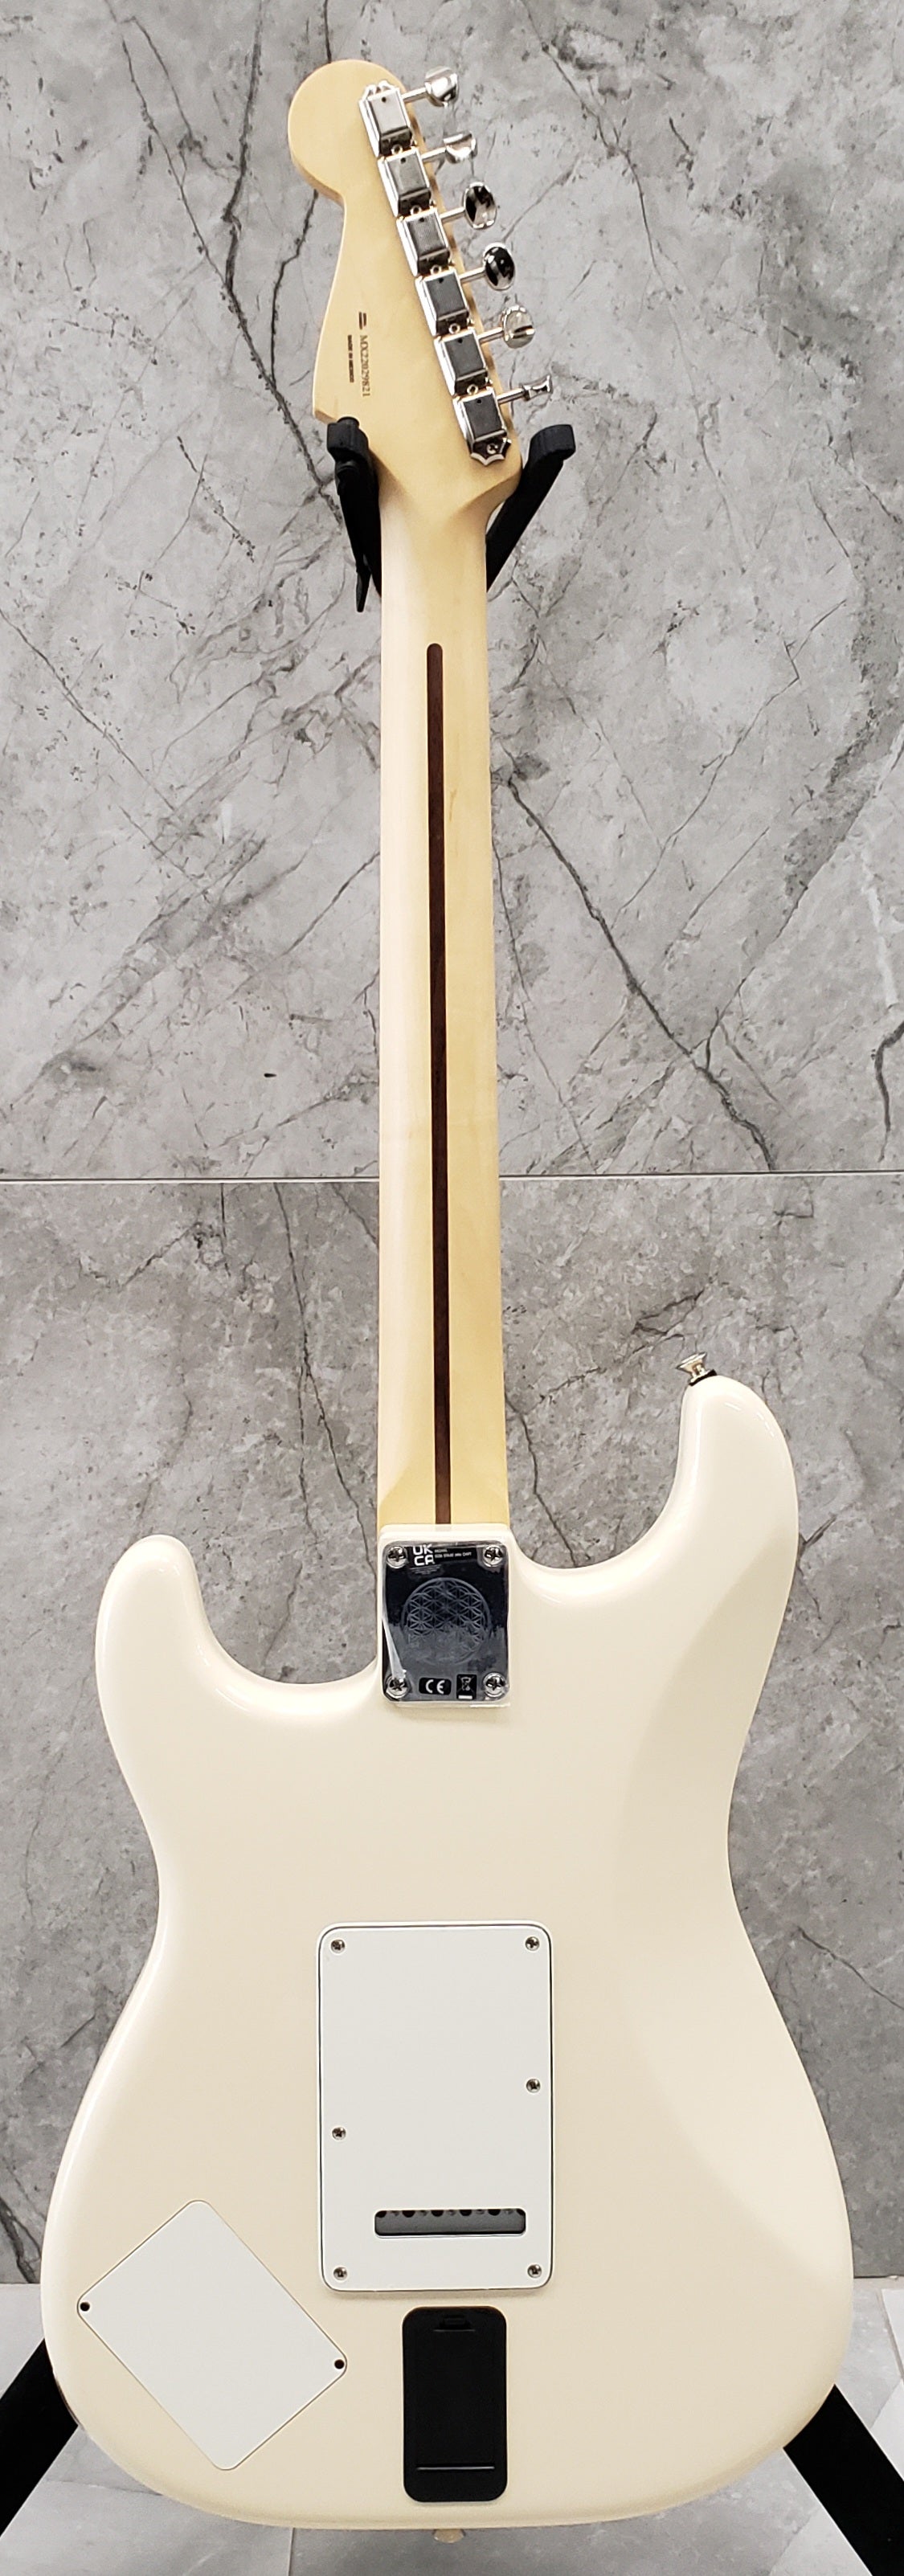 Fender EOB Stratocaster Maple Fingerboard Olympic White Ed O'Brien Signature 0140192305